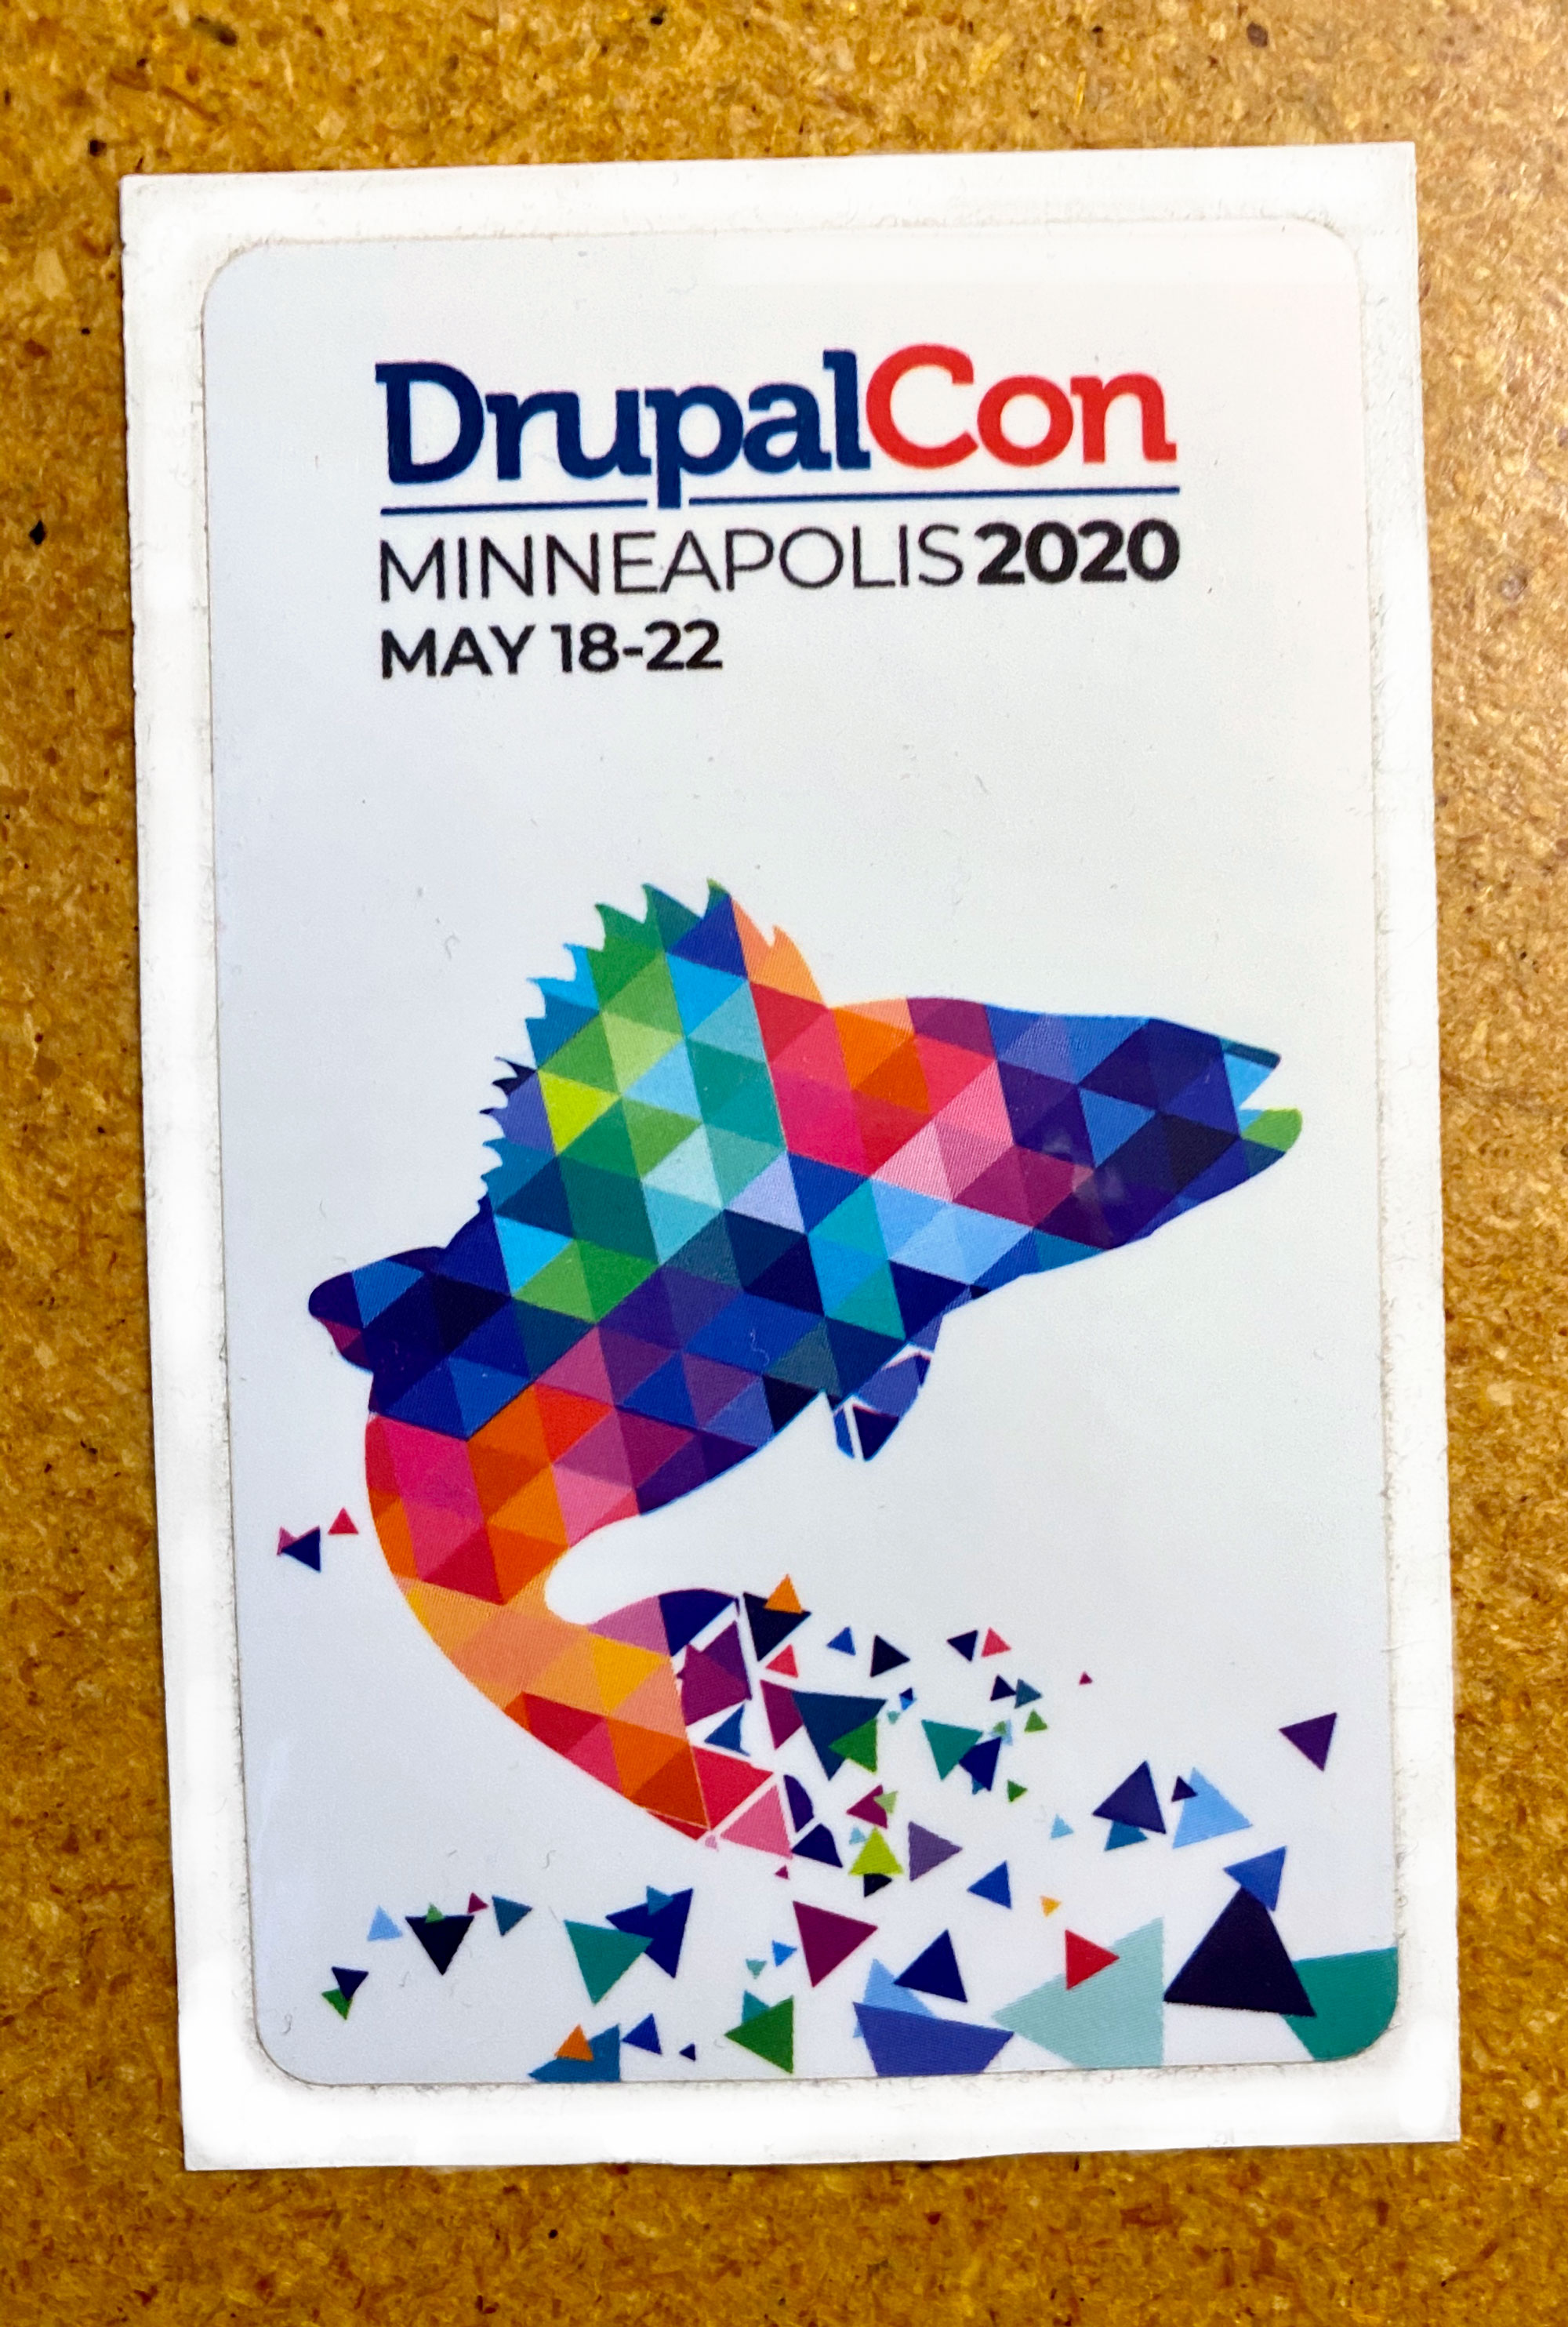 DrupalCon Minneapolis sticker with icon of fish